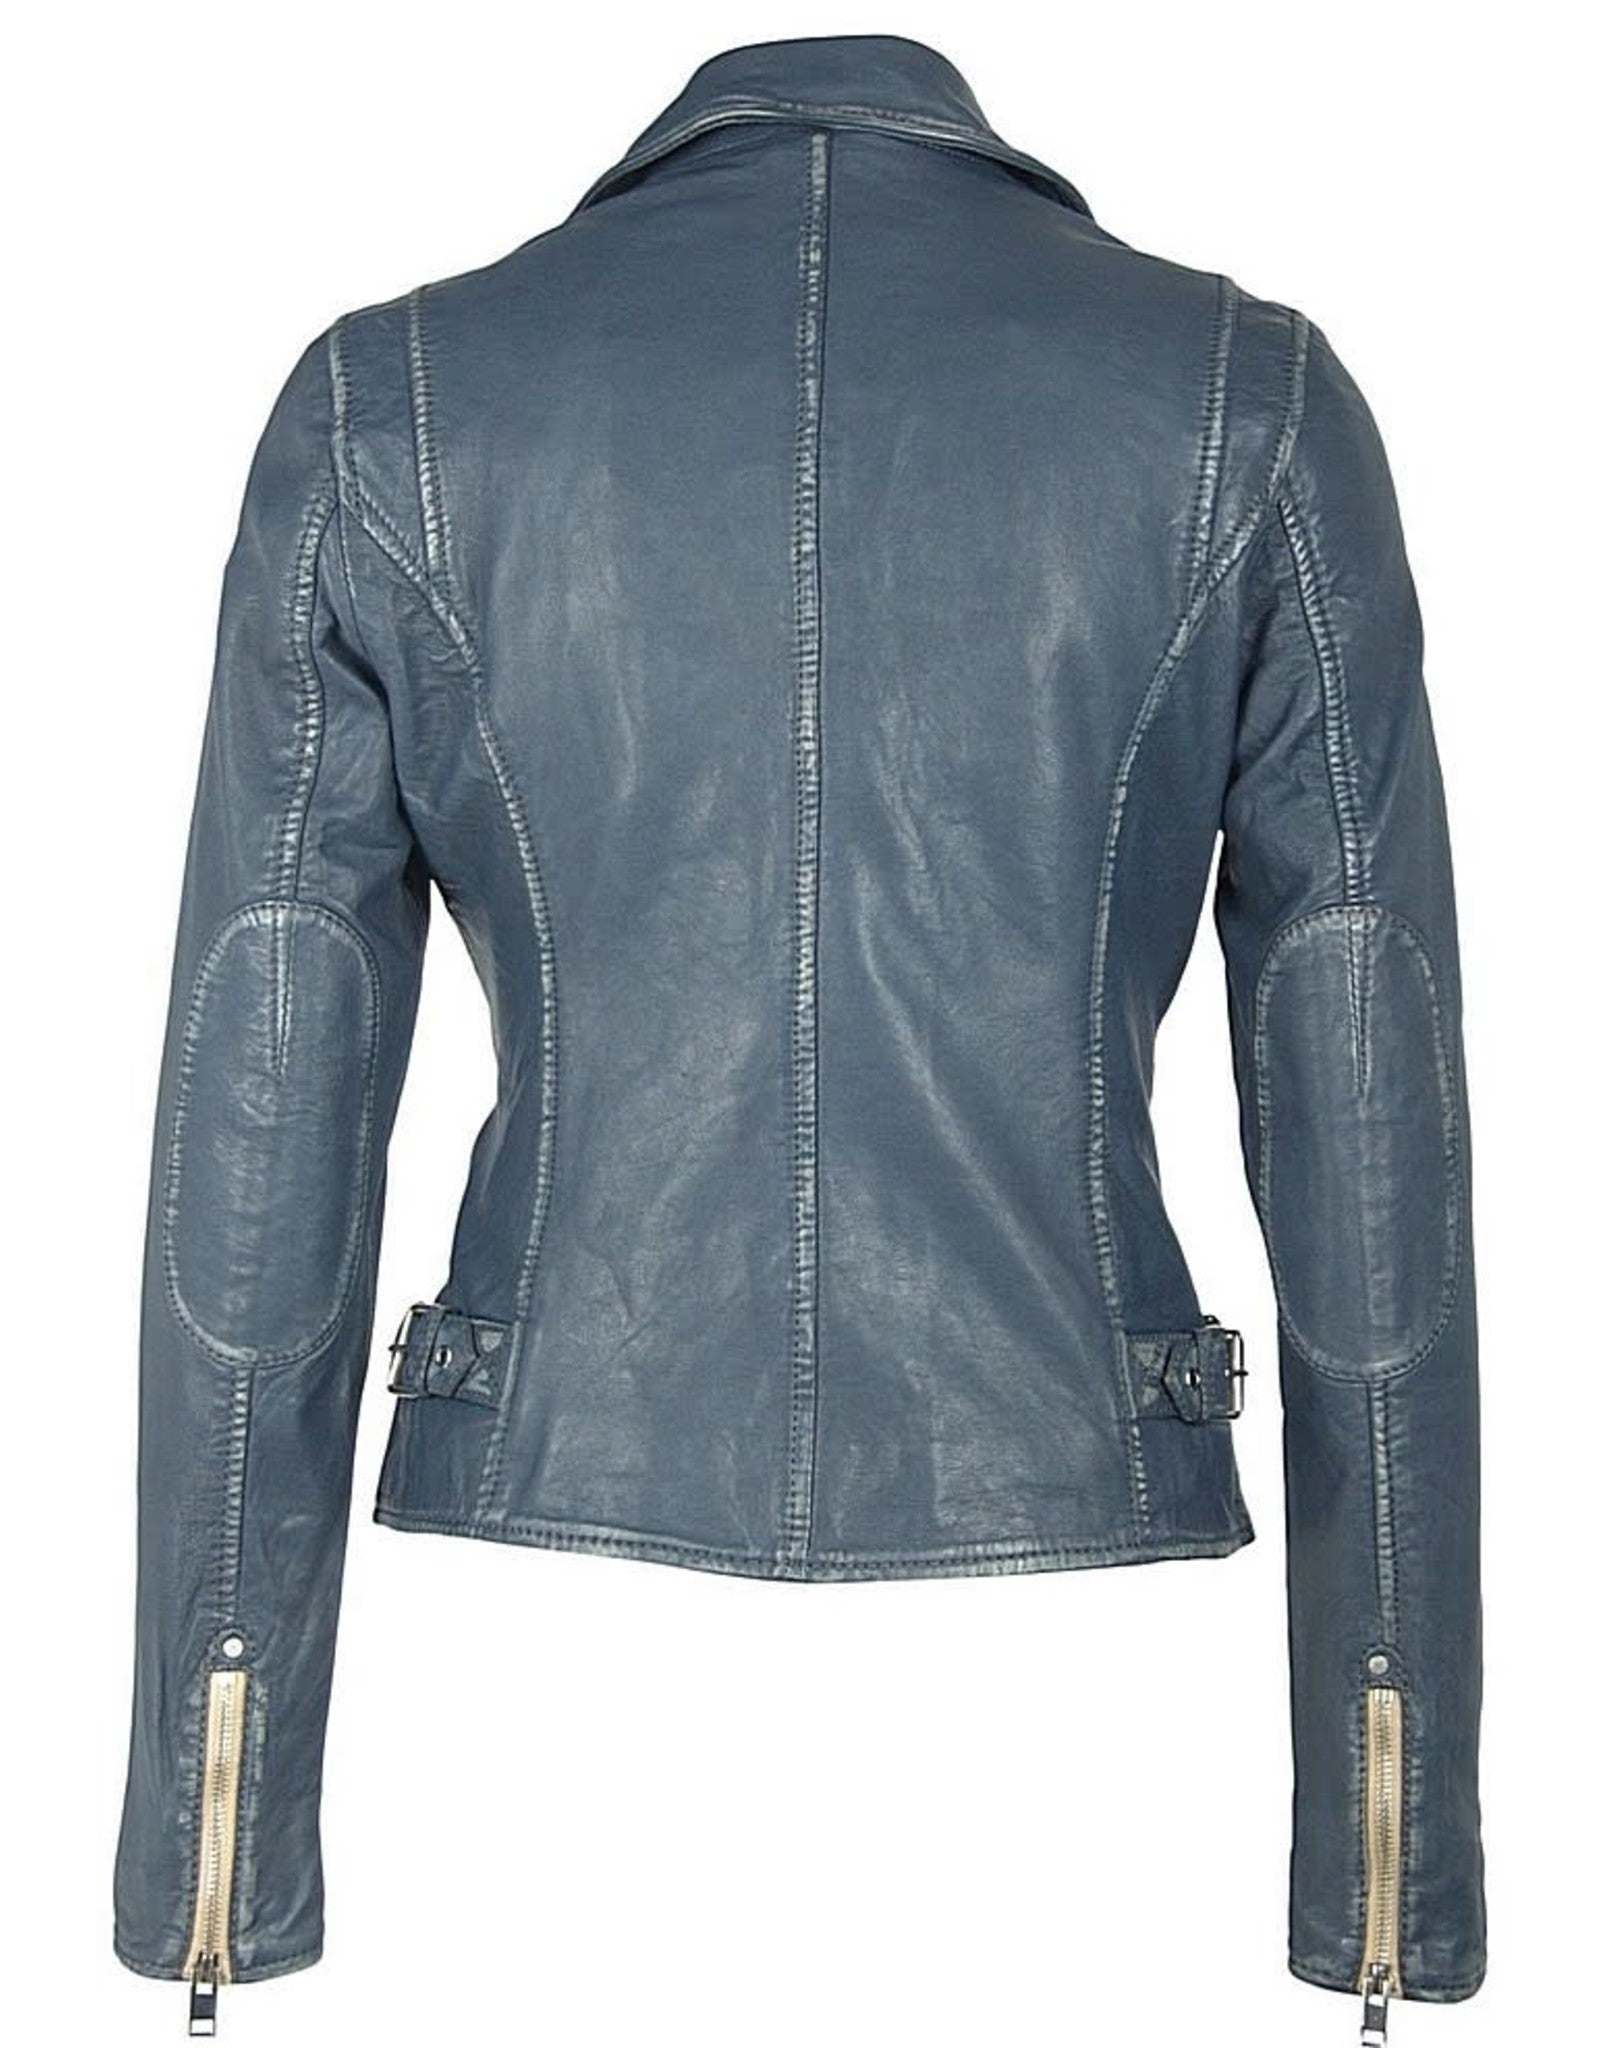 Mauritius Mauritius - Sofia 4 RF Woman's Leather Jacket - Denim Blue available at The Good Life Boutique